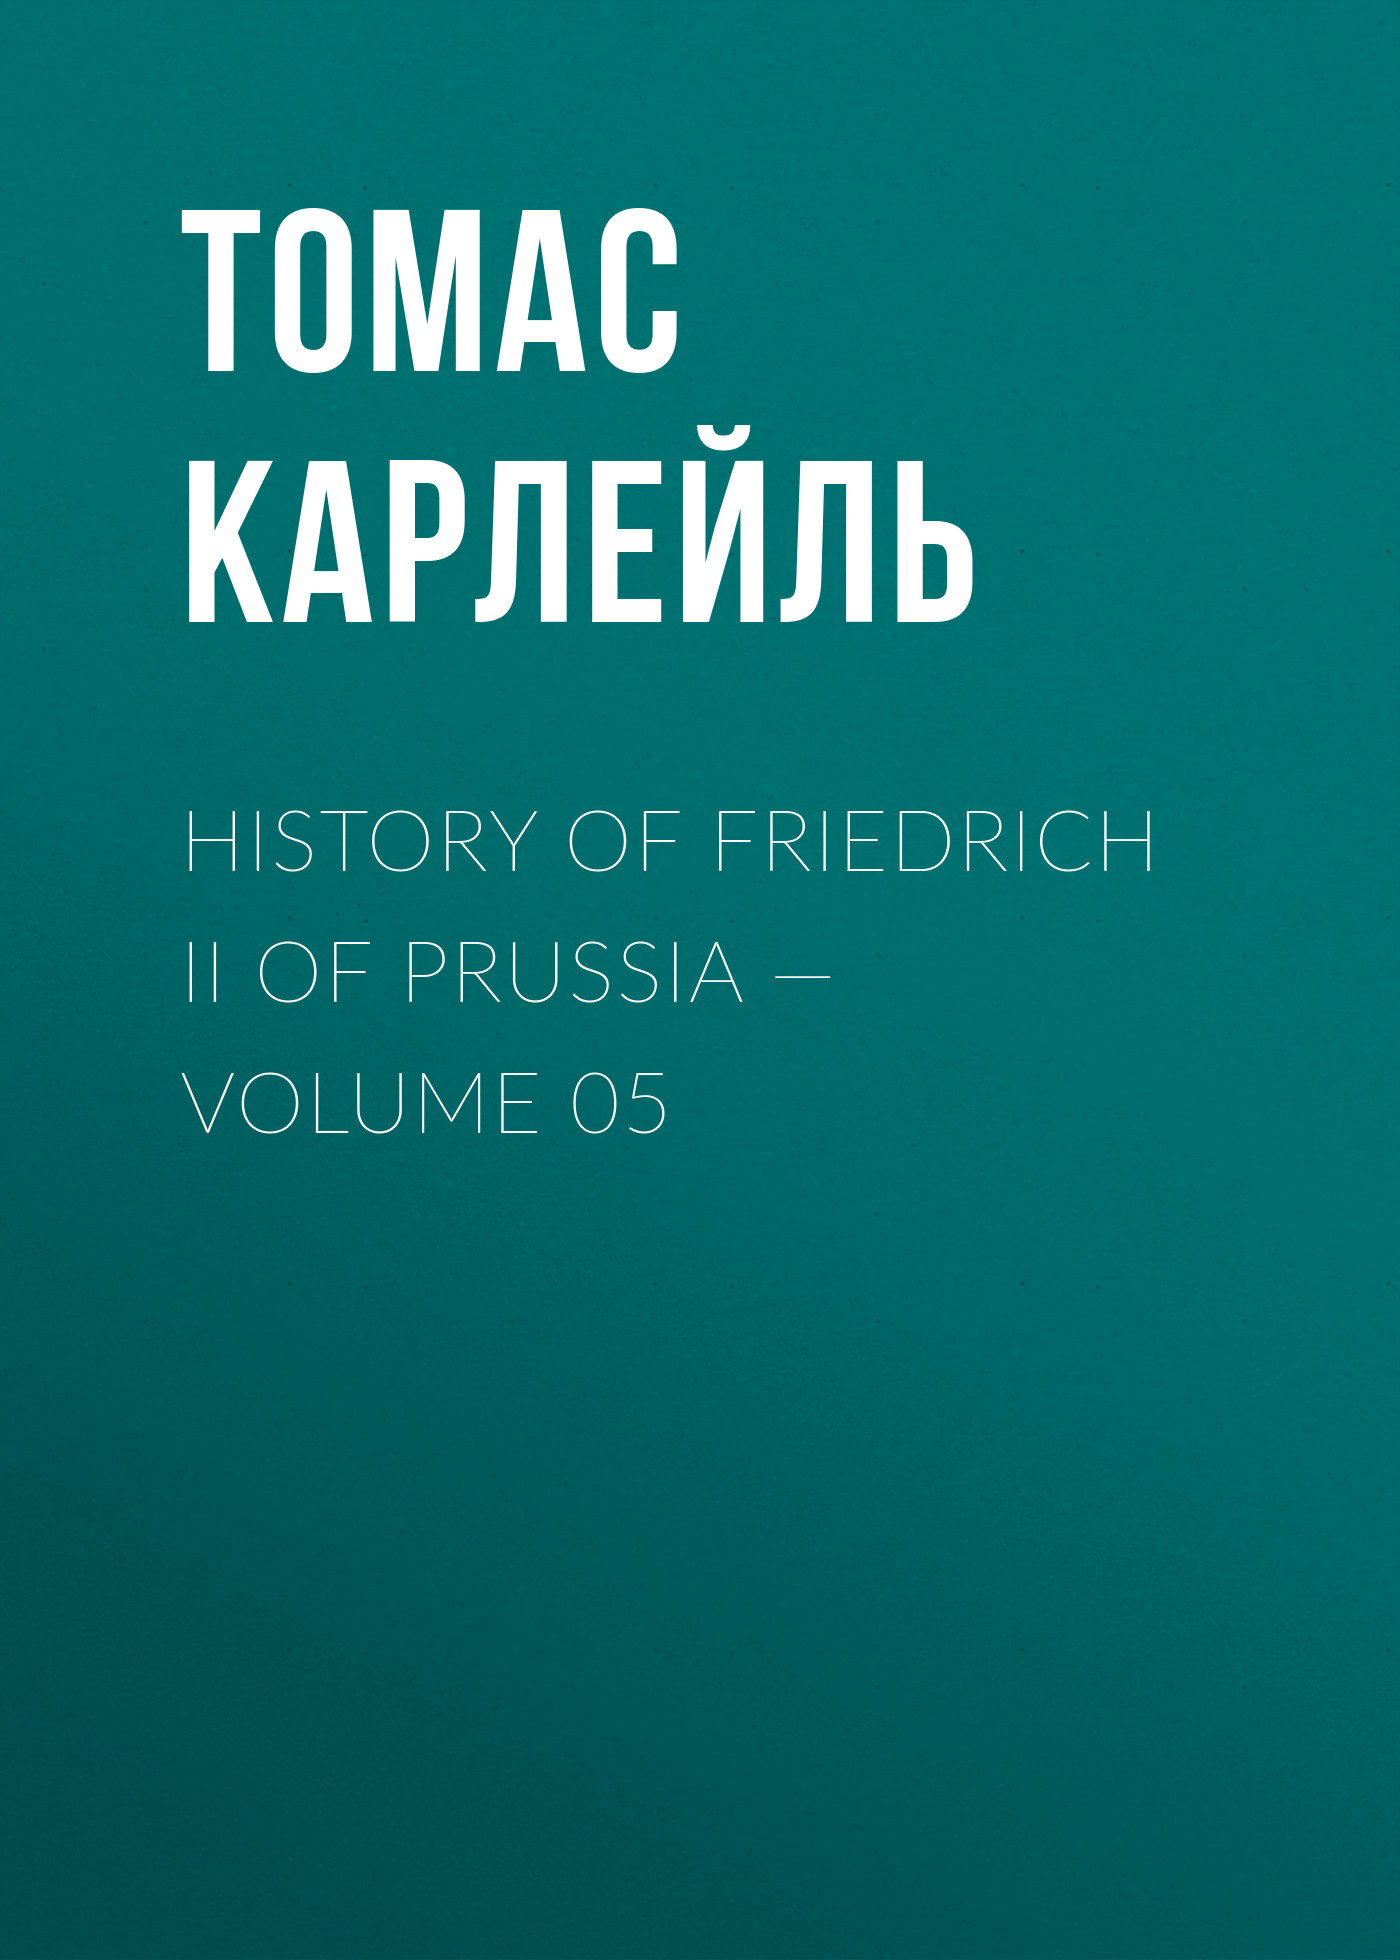 History of Friedrich II of Prussia— Volume 05